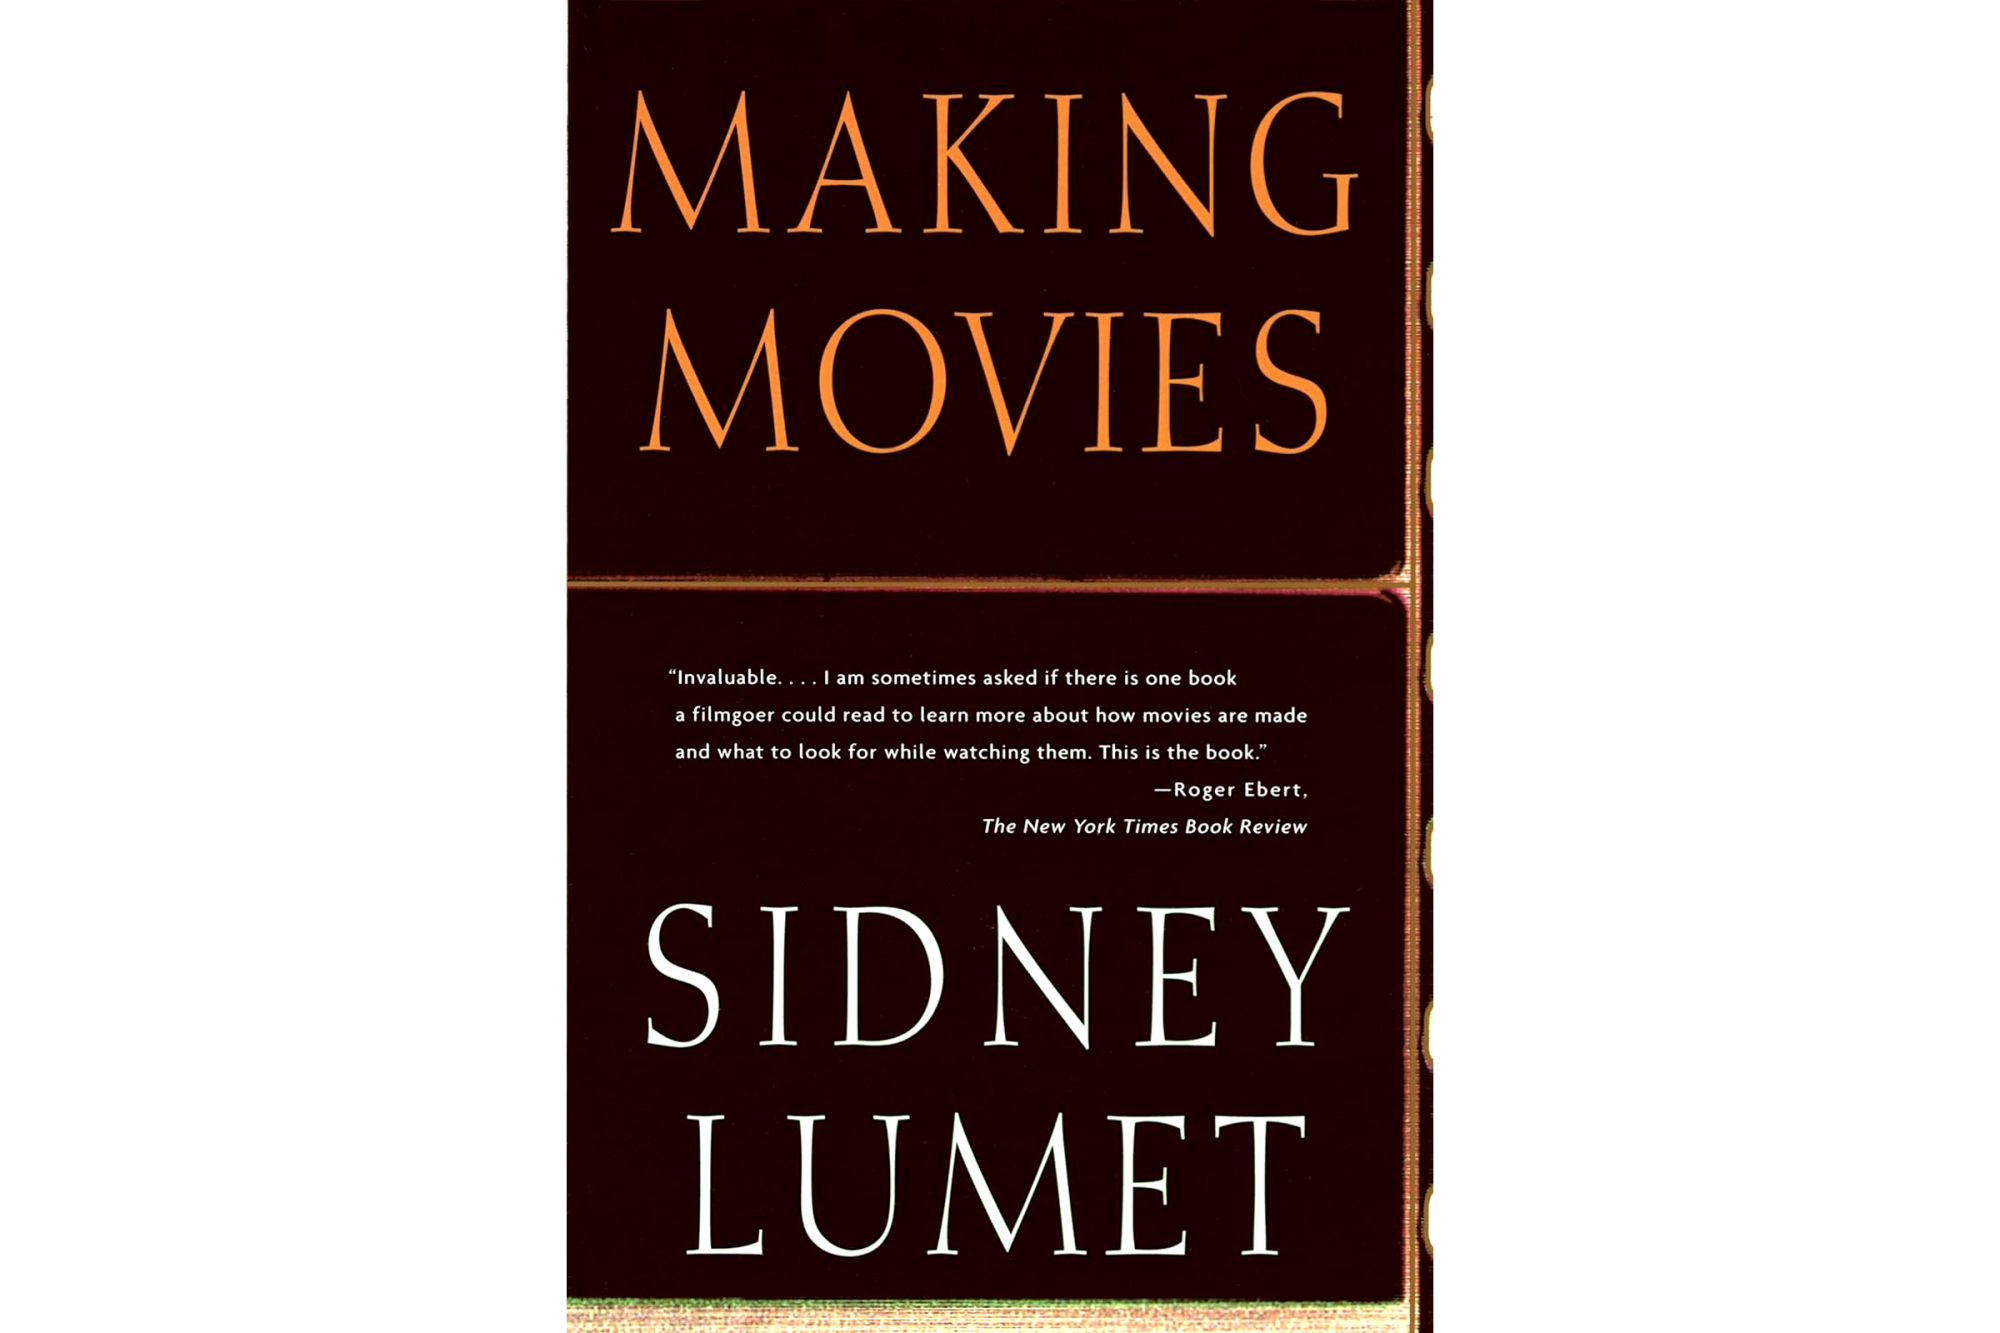 "Making Movies" by Sidney Lumet